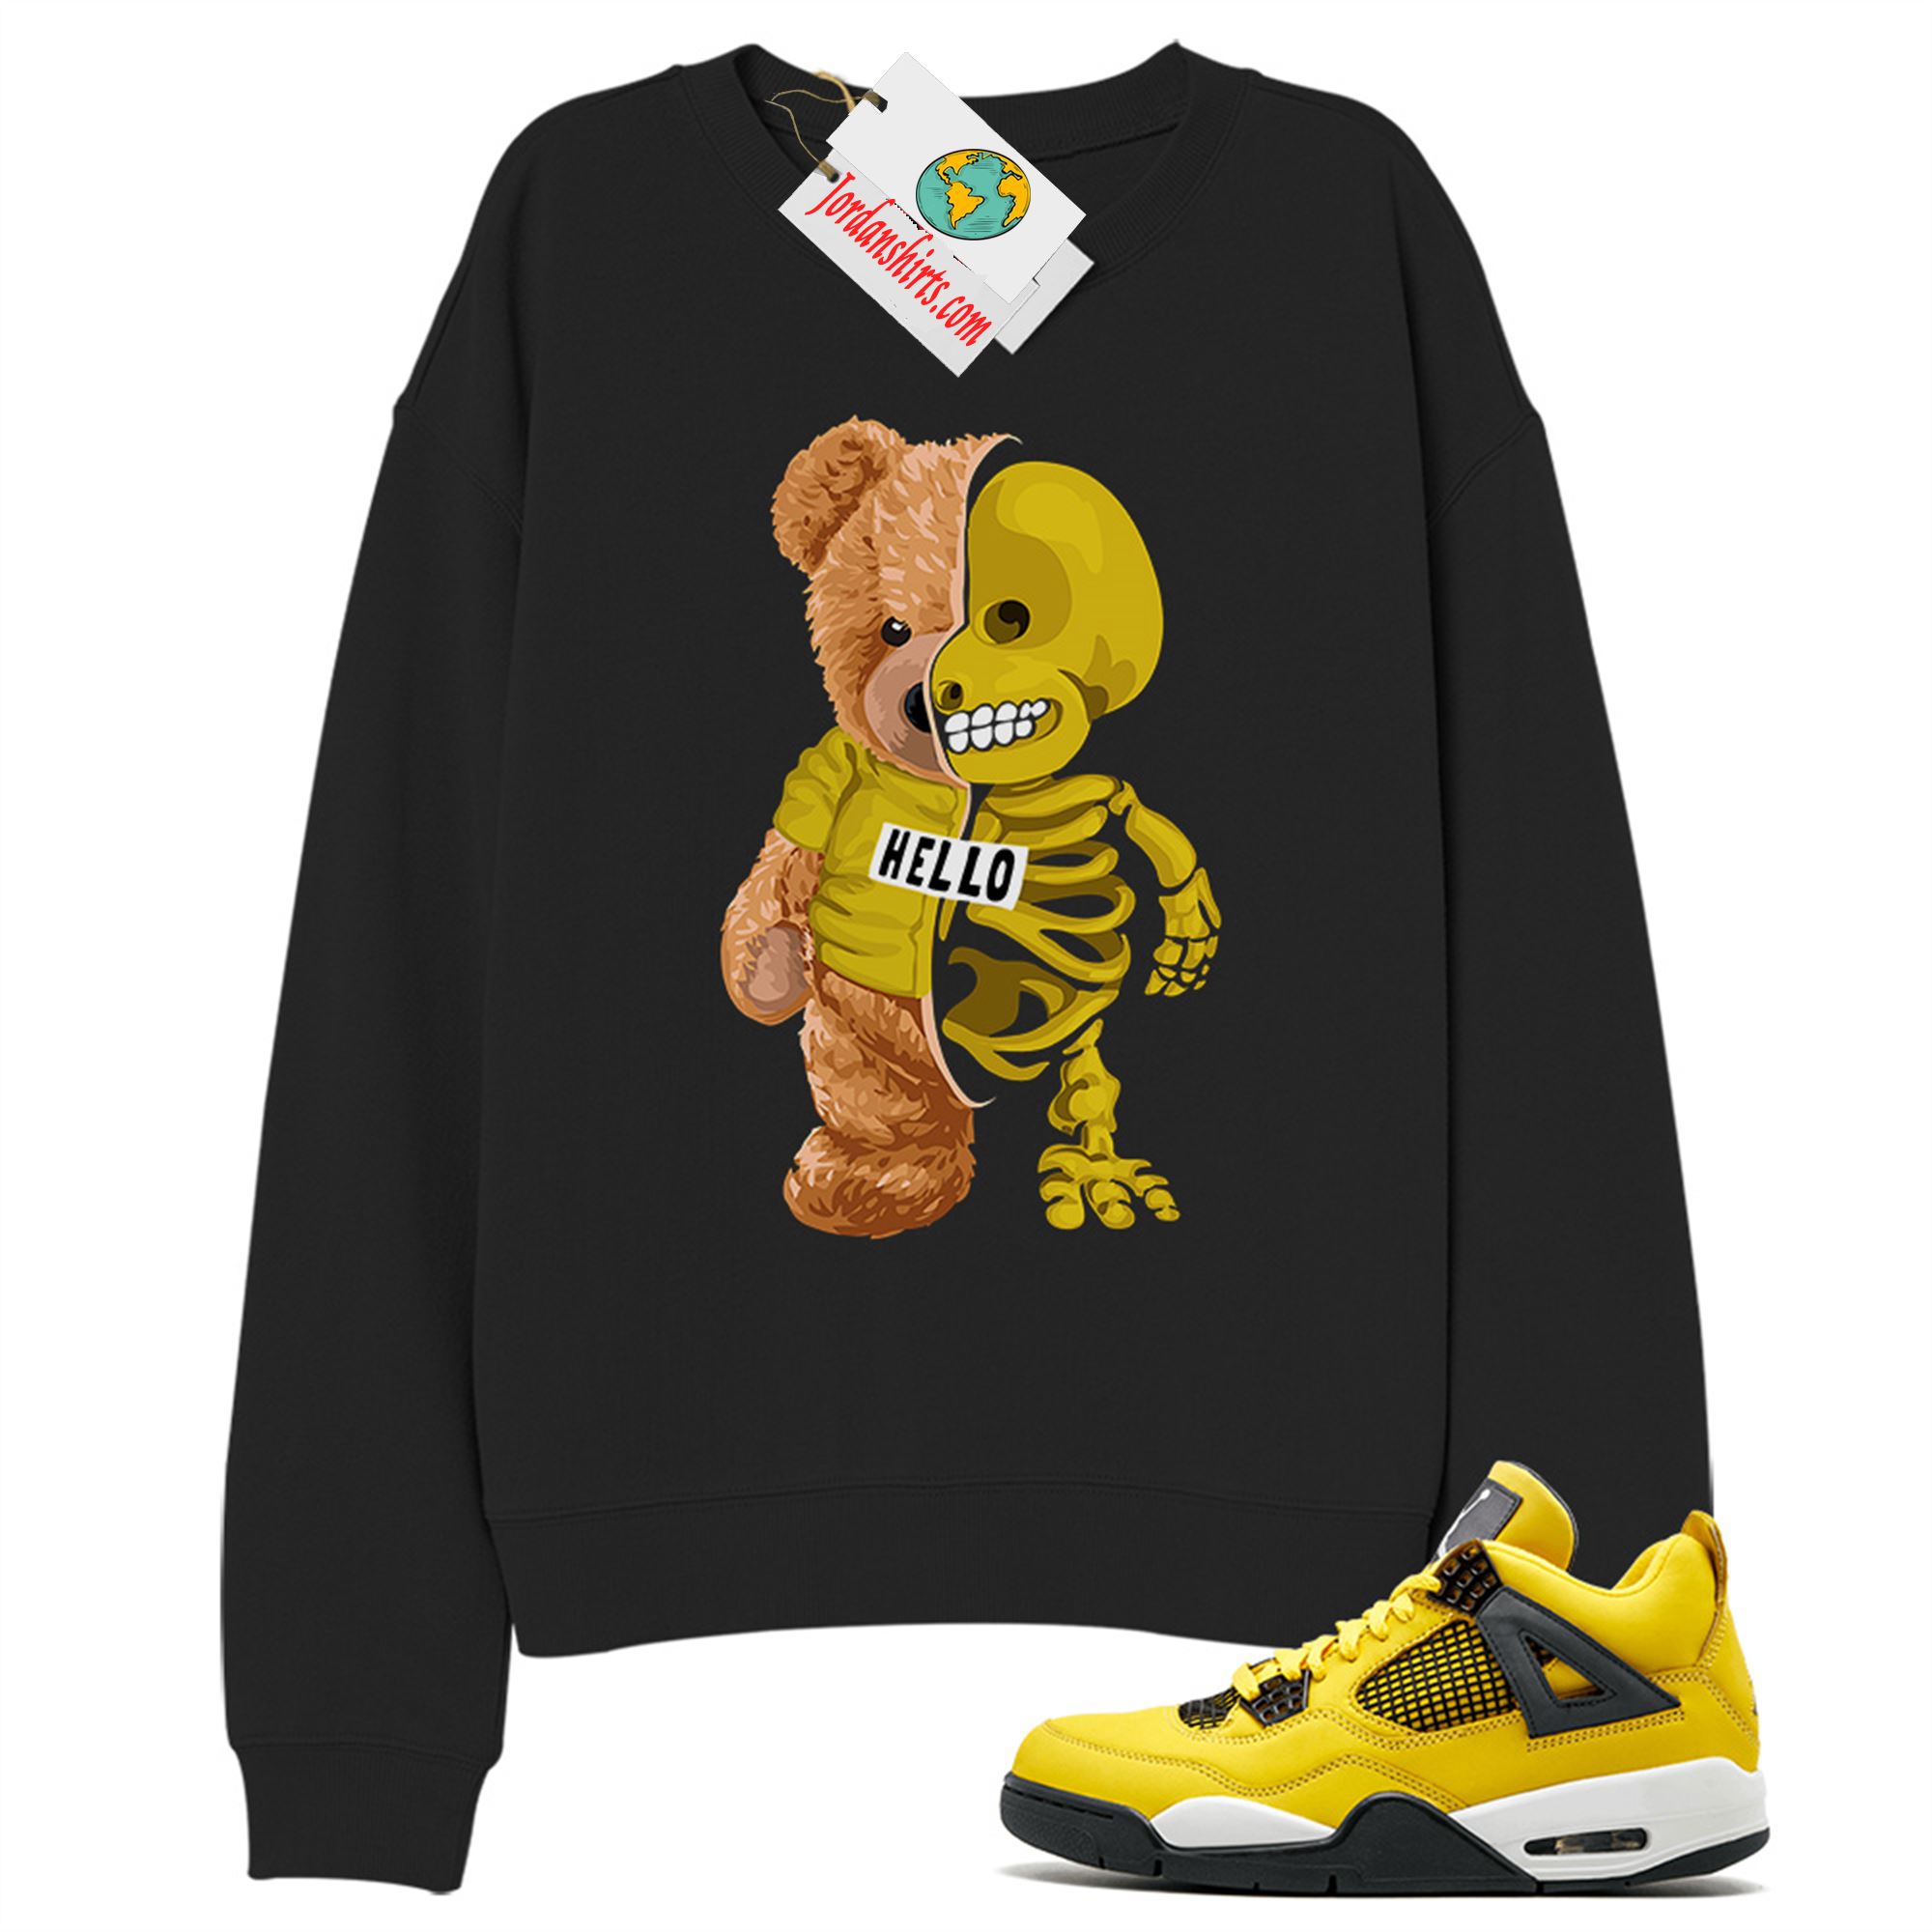 Jordan 4 Sweatshirt, Teddy Bear Half Skeleton Black Sweatshirt Air Jordan 4 Tour Yellowlightning 4s Full Size Up To 5xl